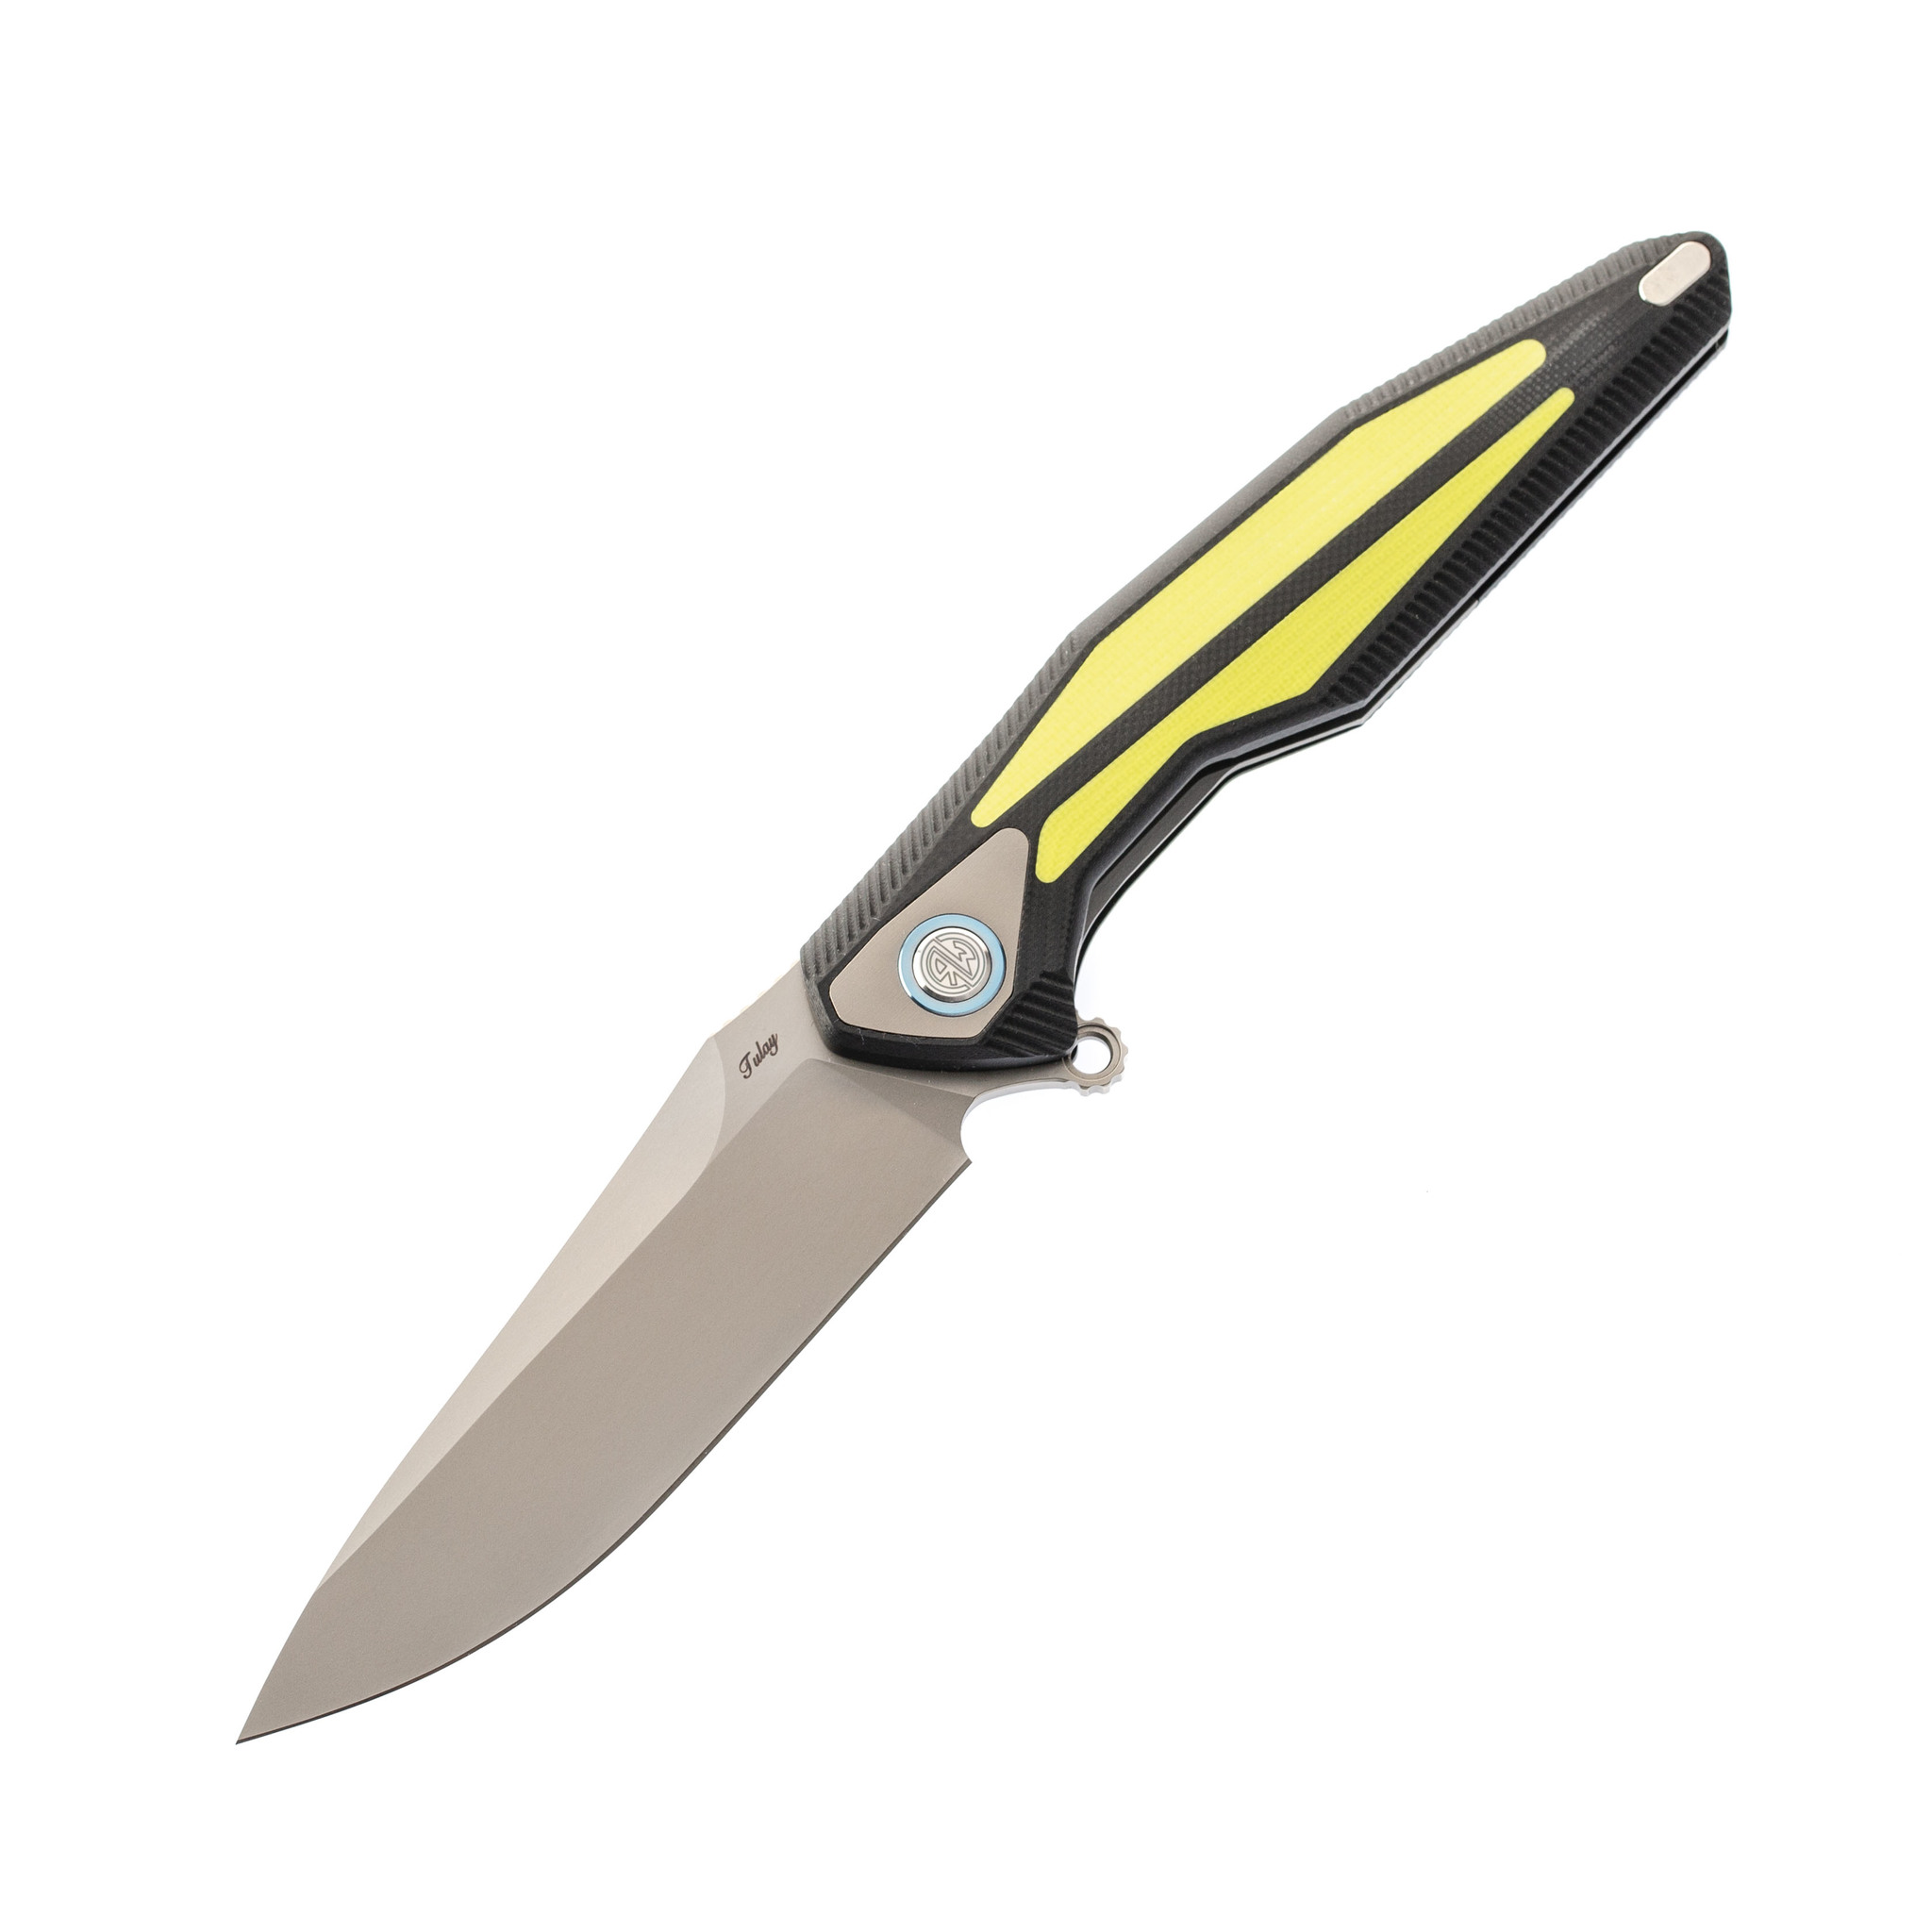   Tulay Rikeknife,  154CM, Yellow G10